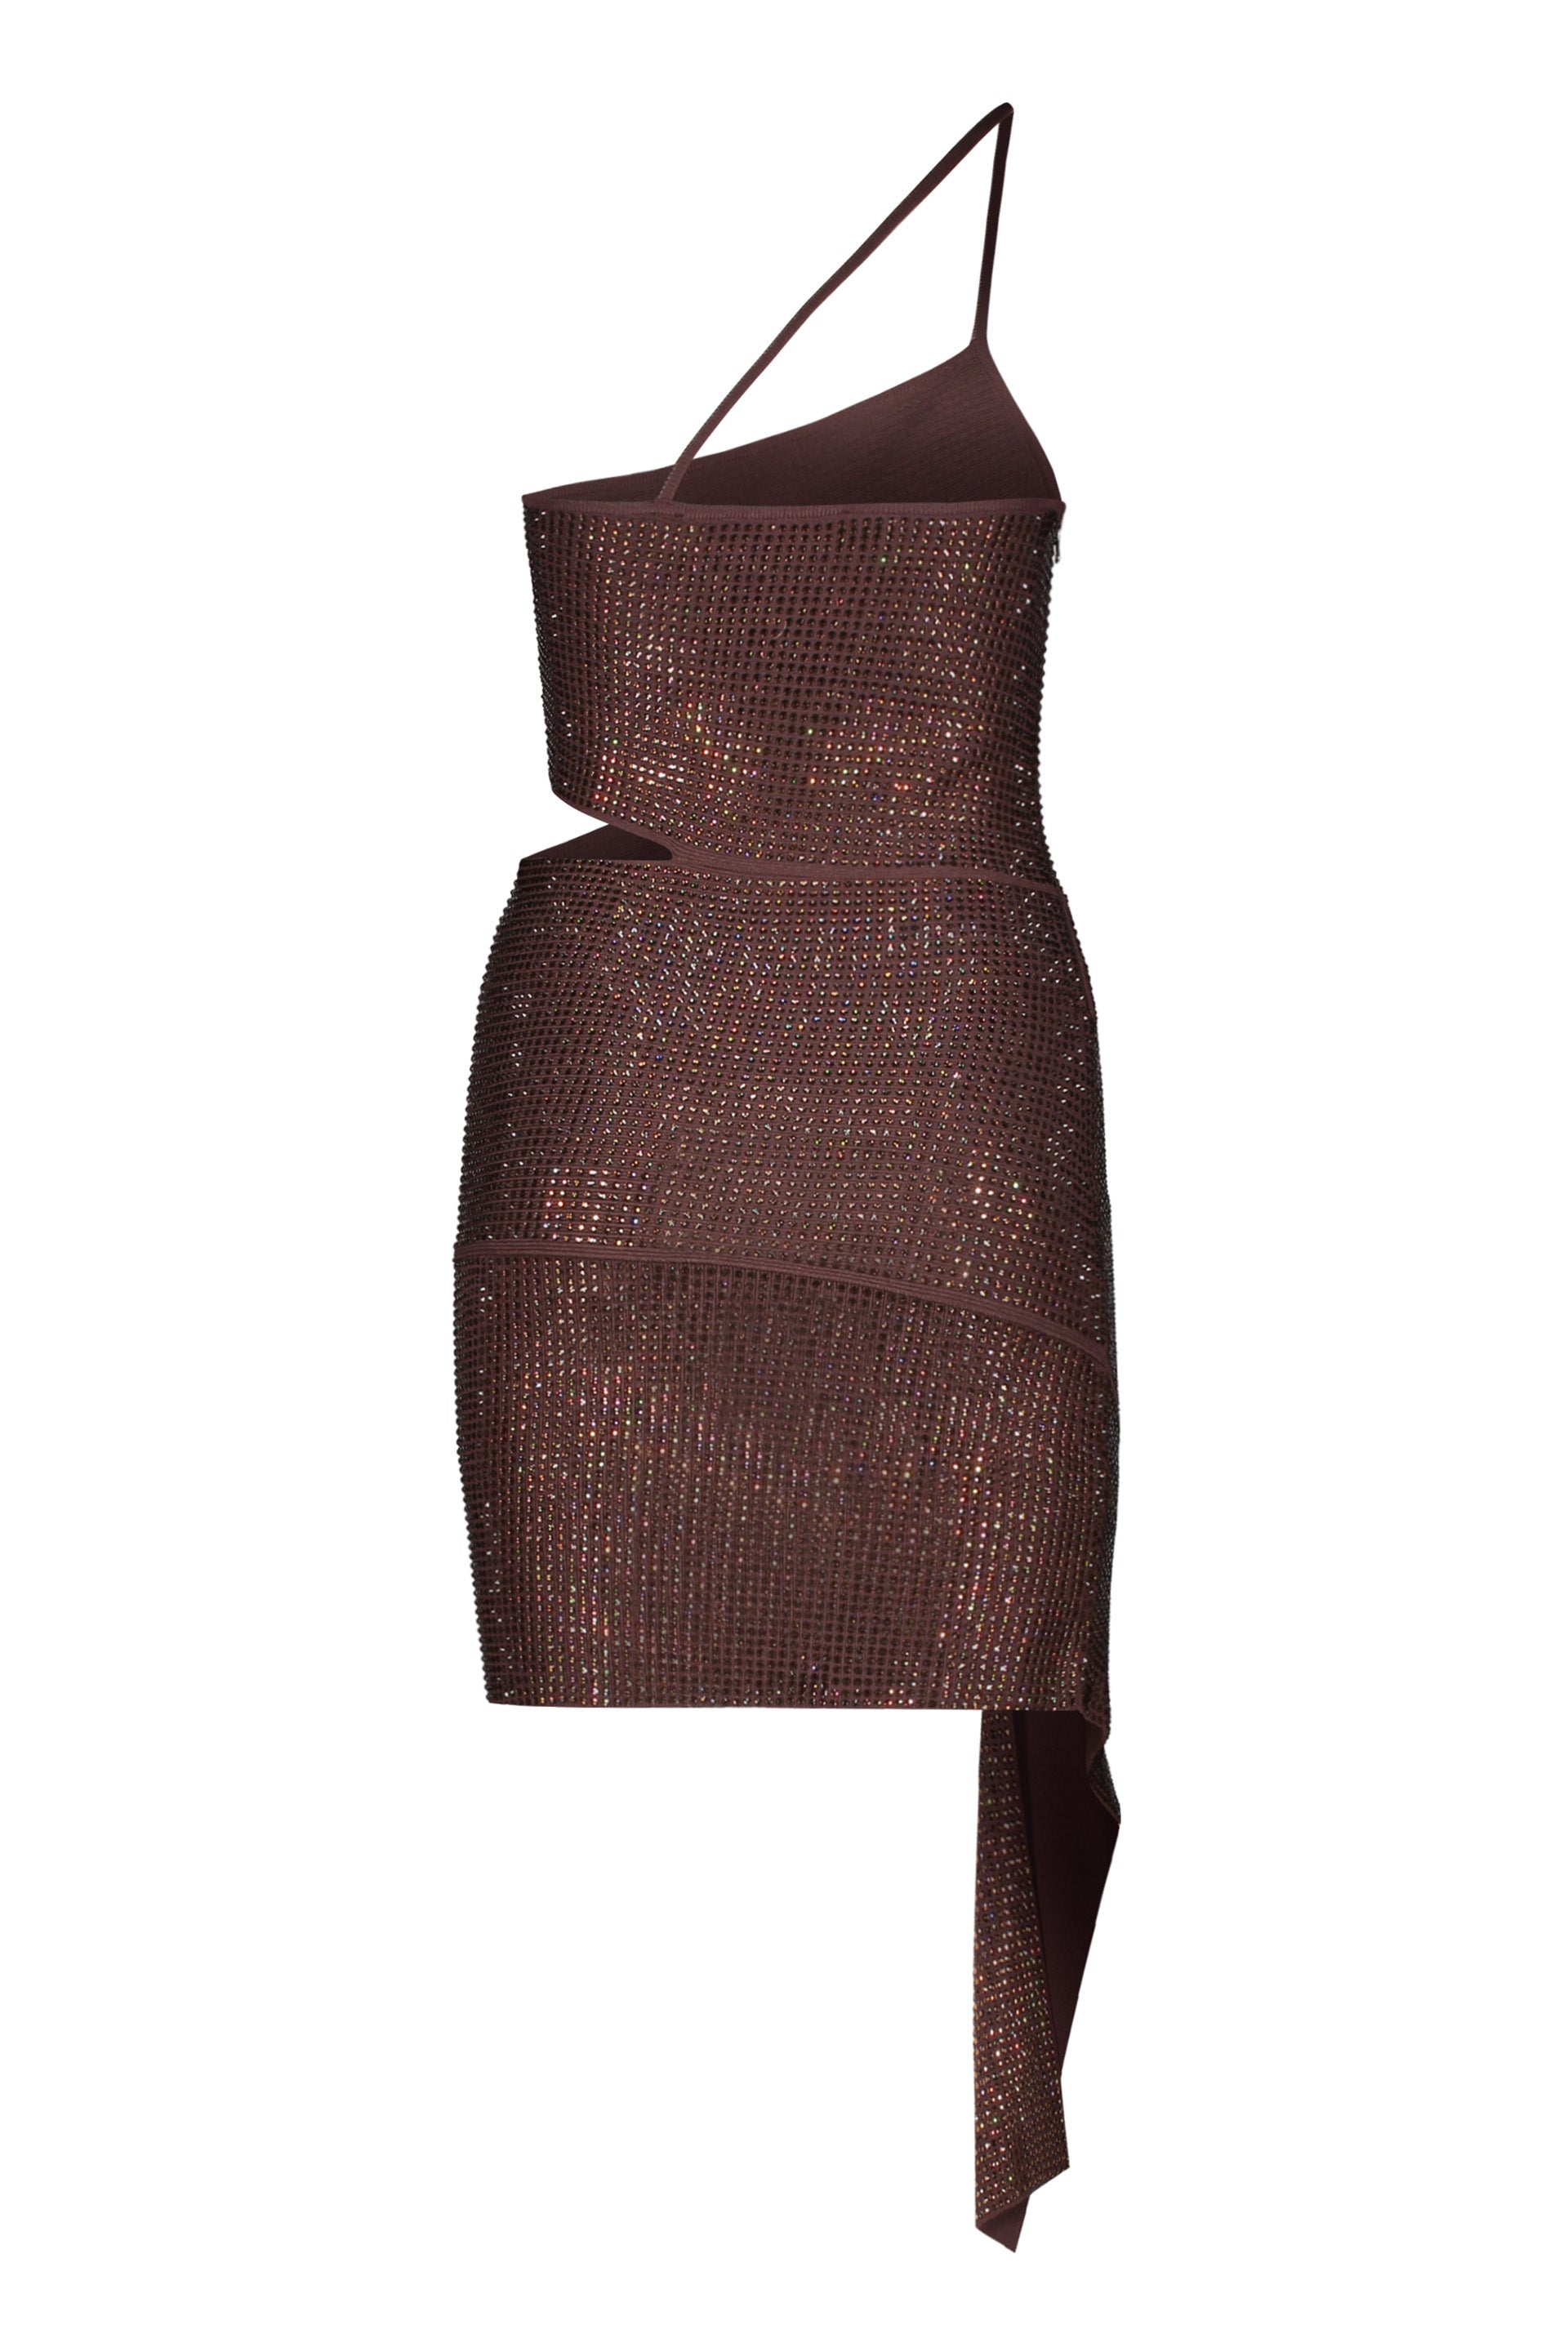 ANDREADAMO-OUTLET-SALE-Embellished-mini-dress-Kleider-Rocke-S-ARCHIVE-COLLECTION-2.jpg